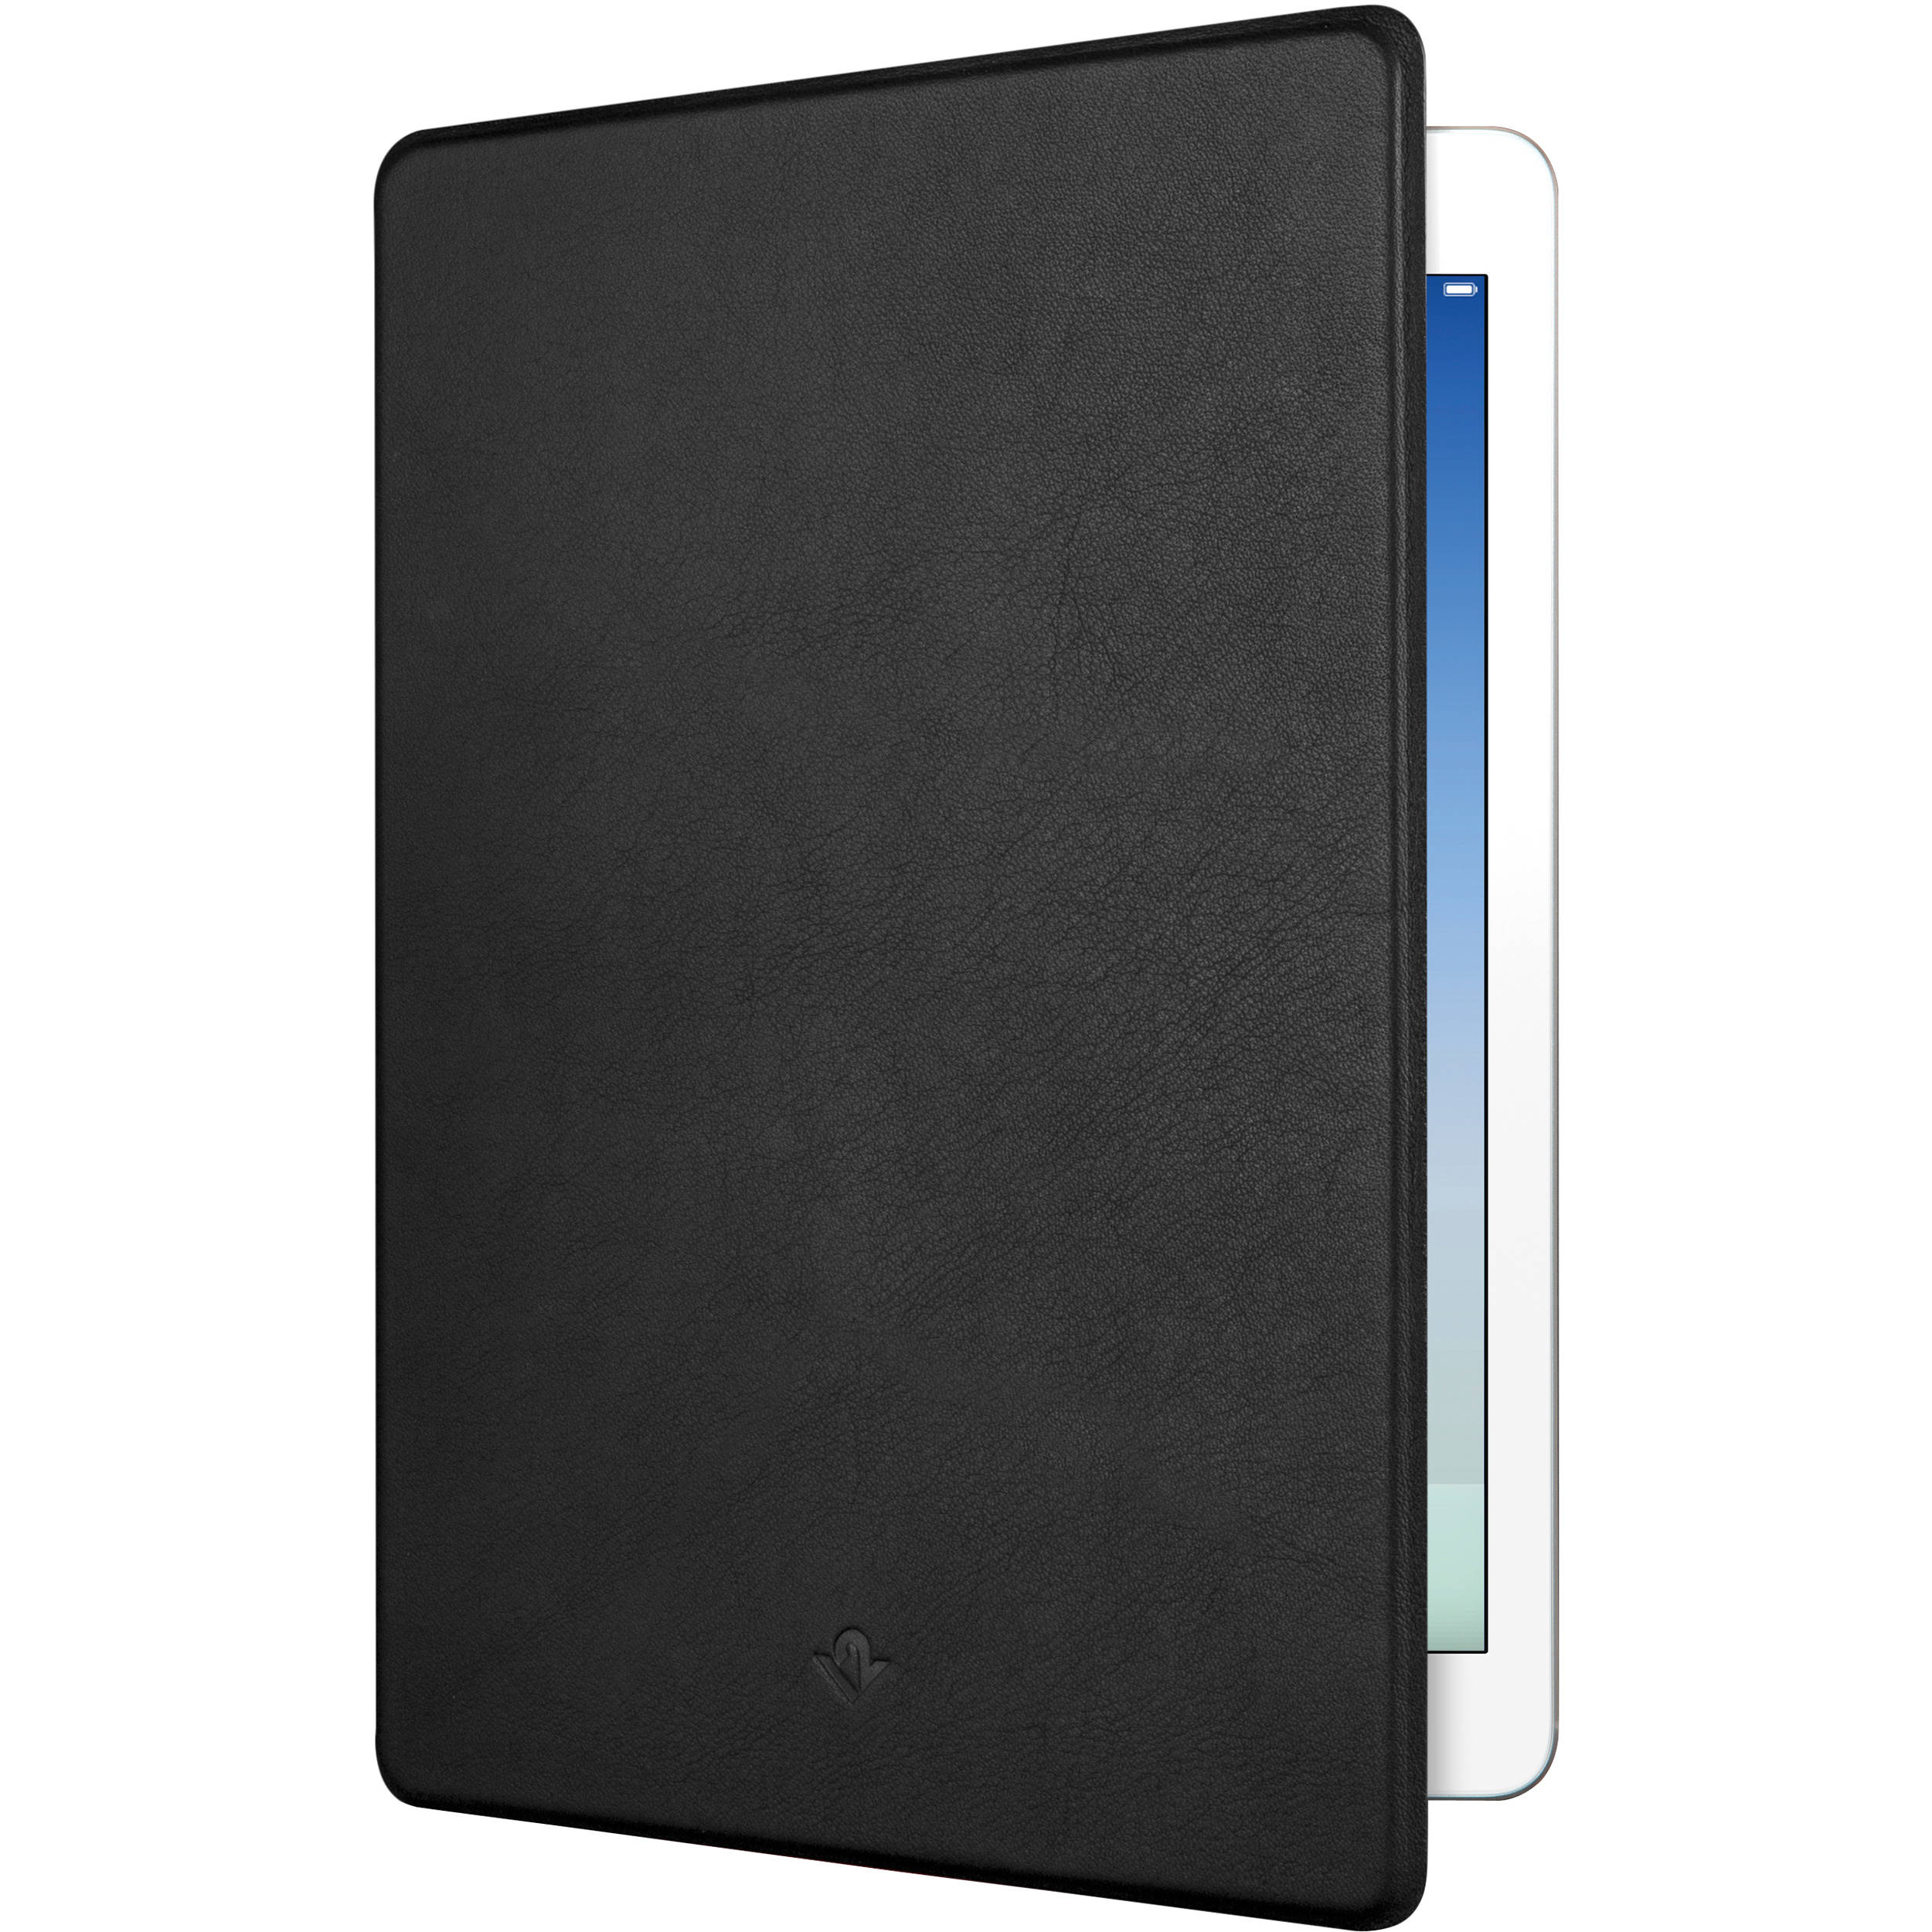 Twelve South SurfacePad for iPad Air (Classic Black)